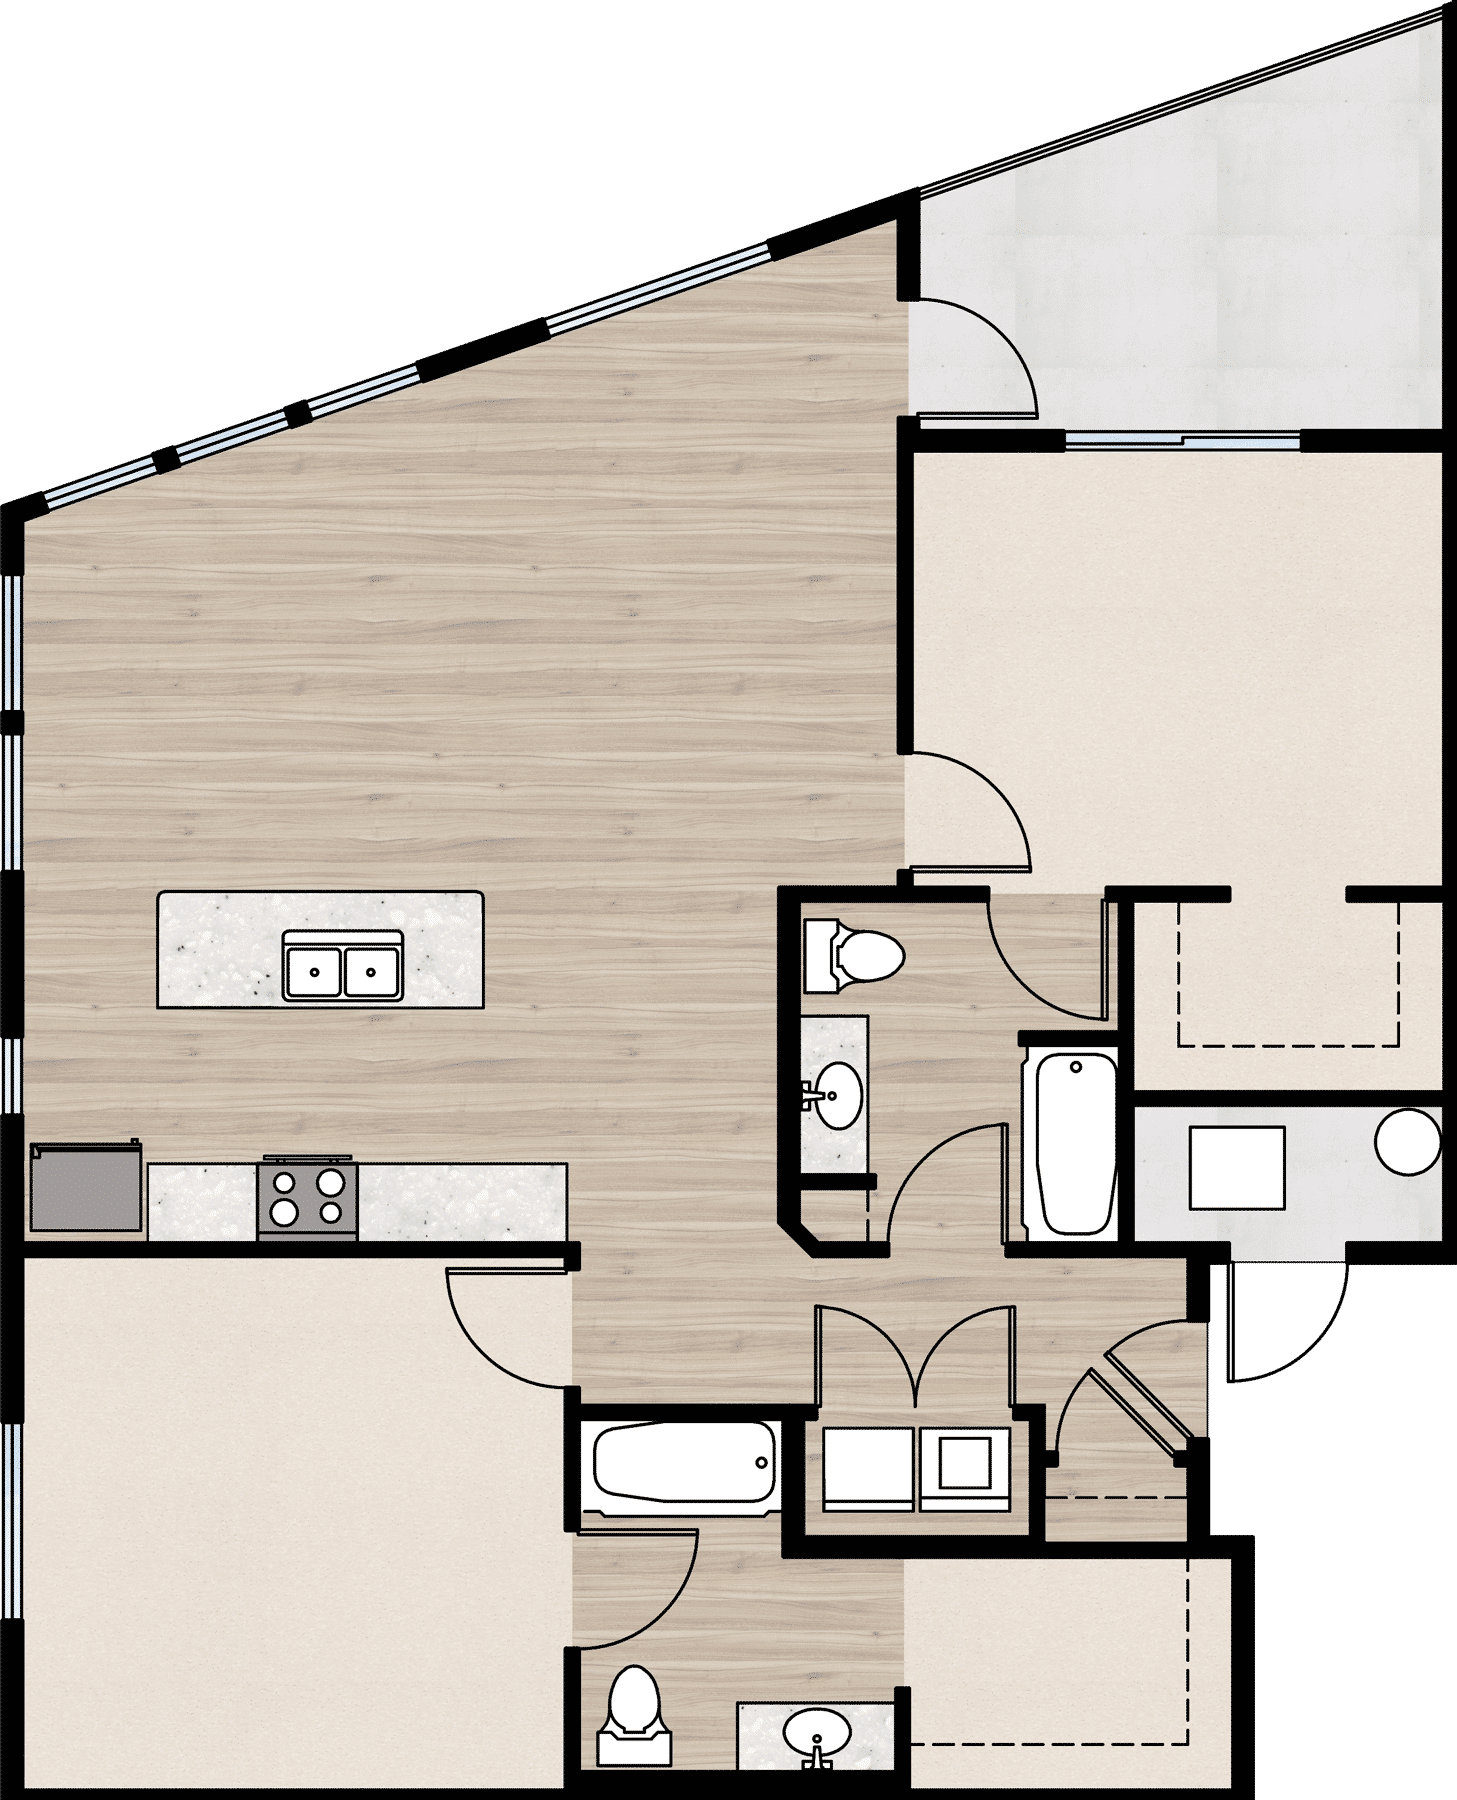 Mill Creek apartment floor plan